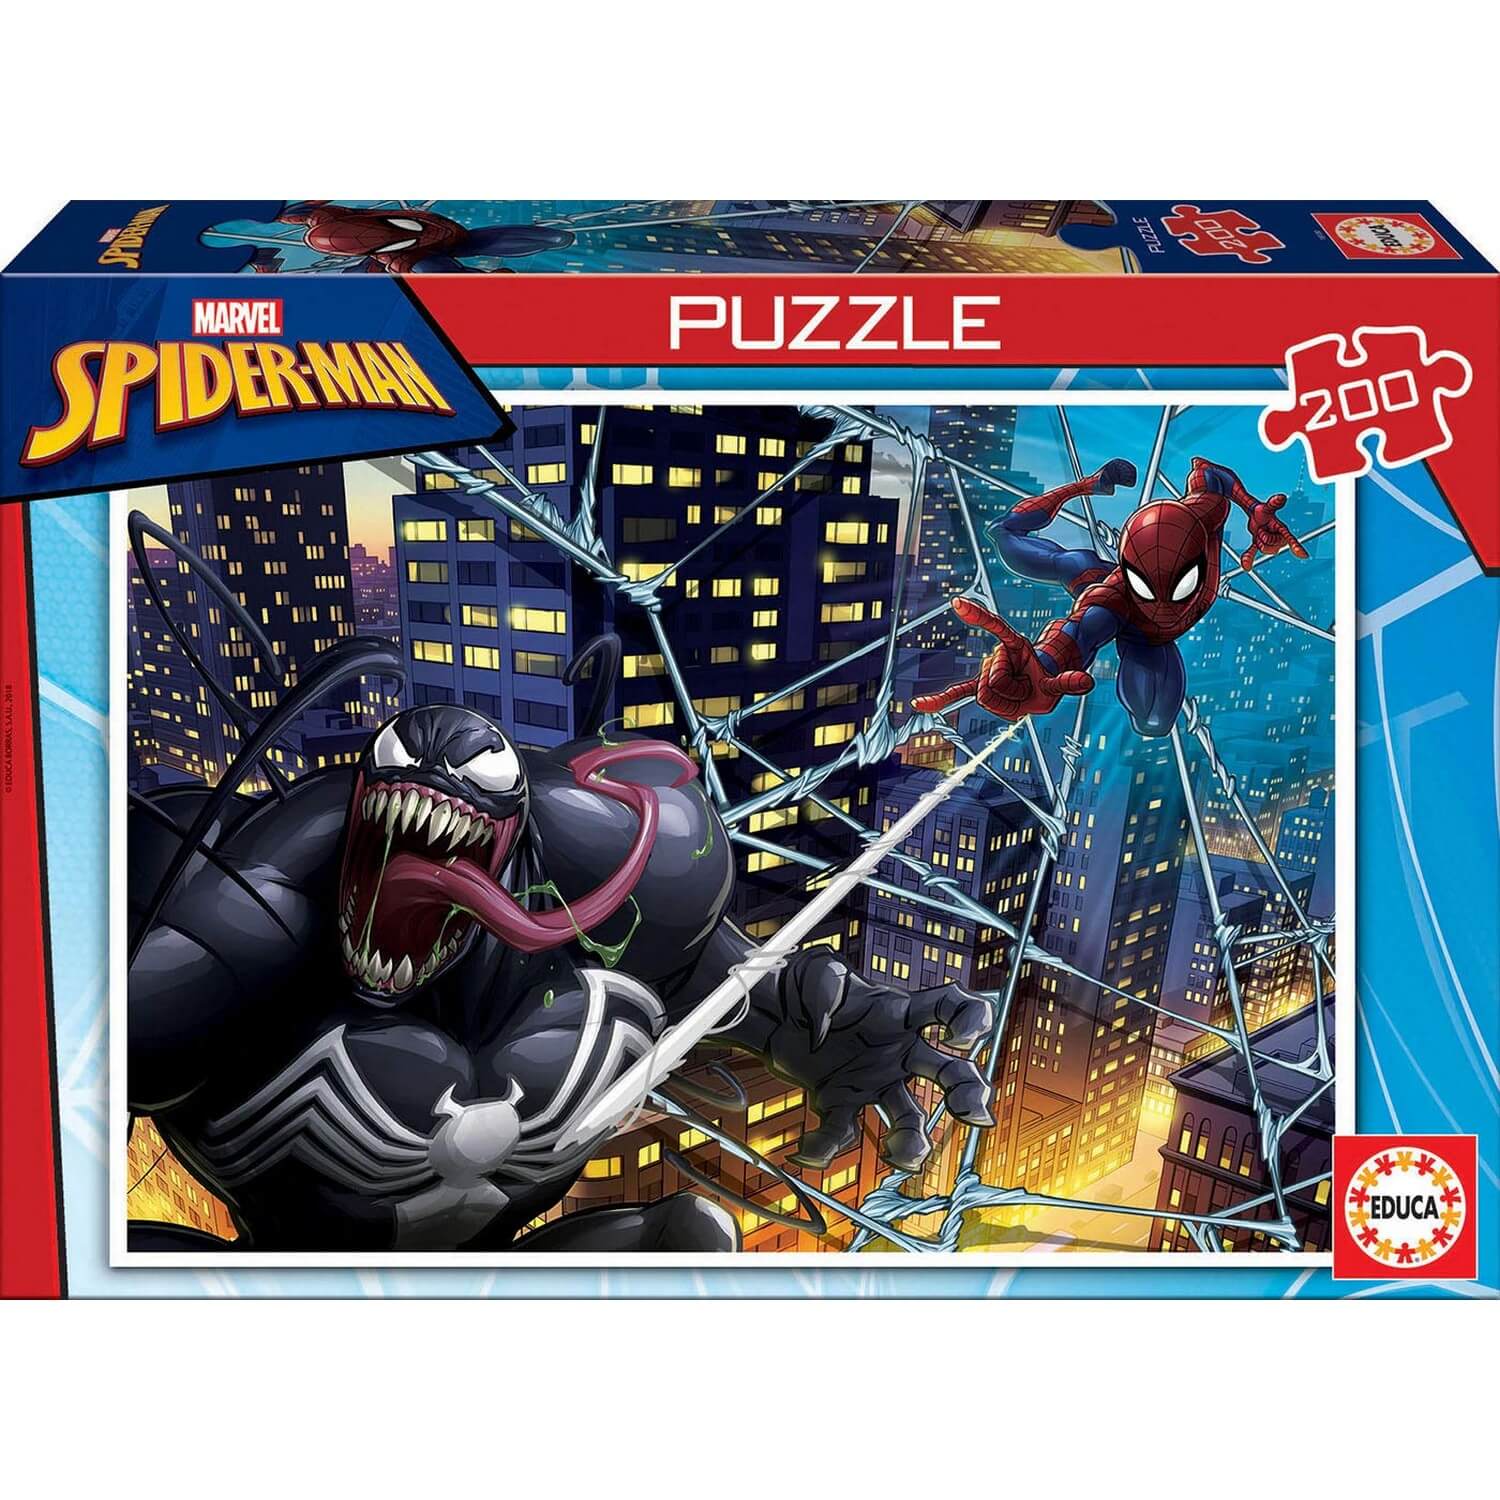 Puzzle 200 pièces : Spiderman - Educa - Rue des Puzzles